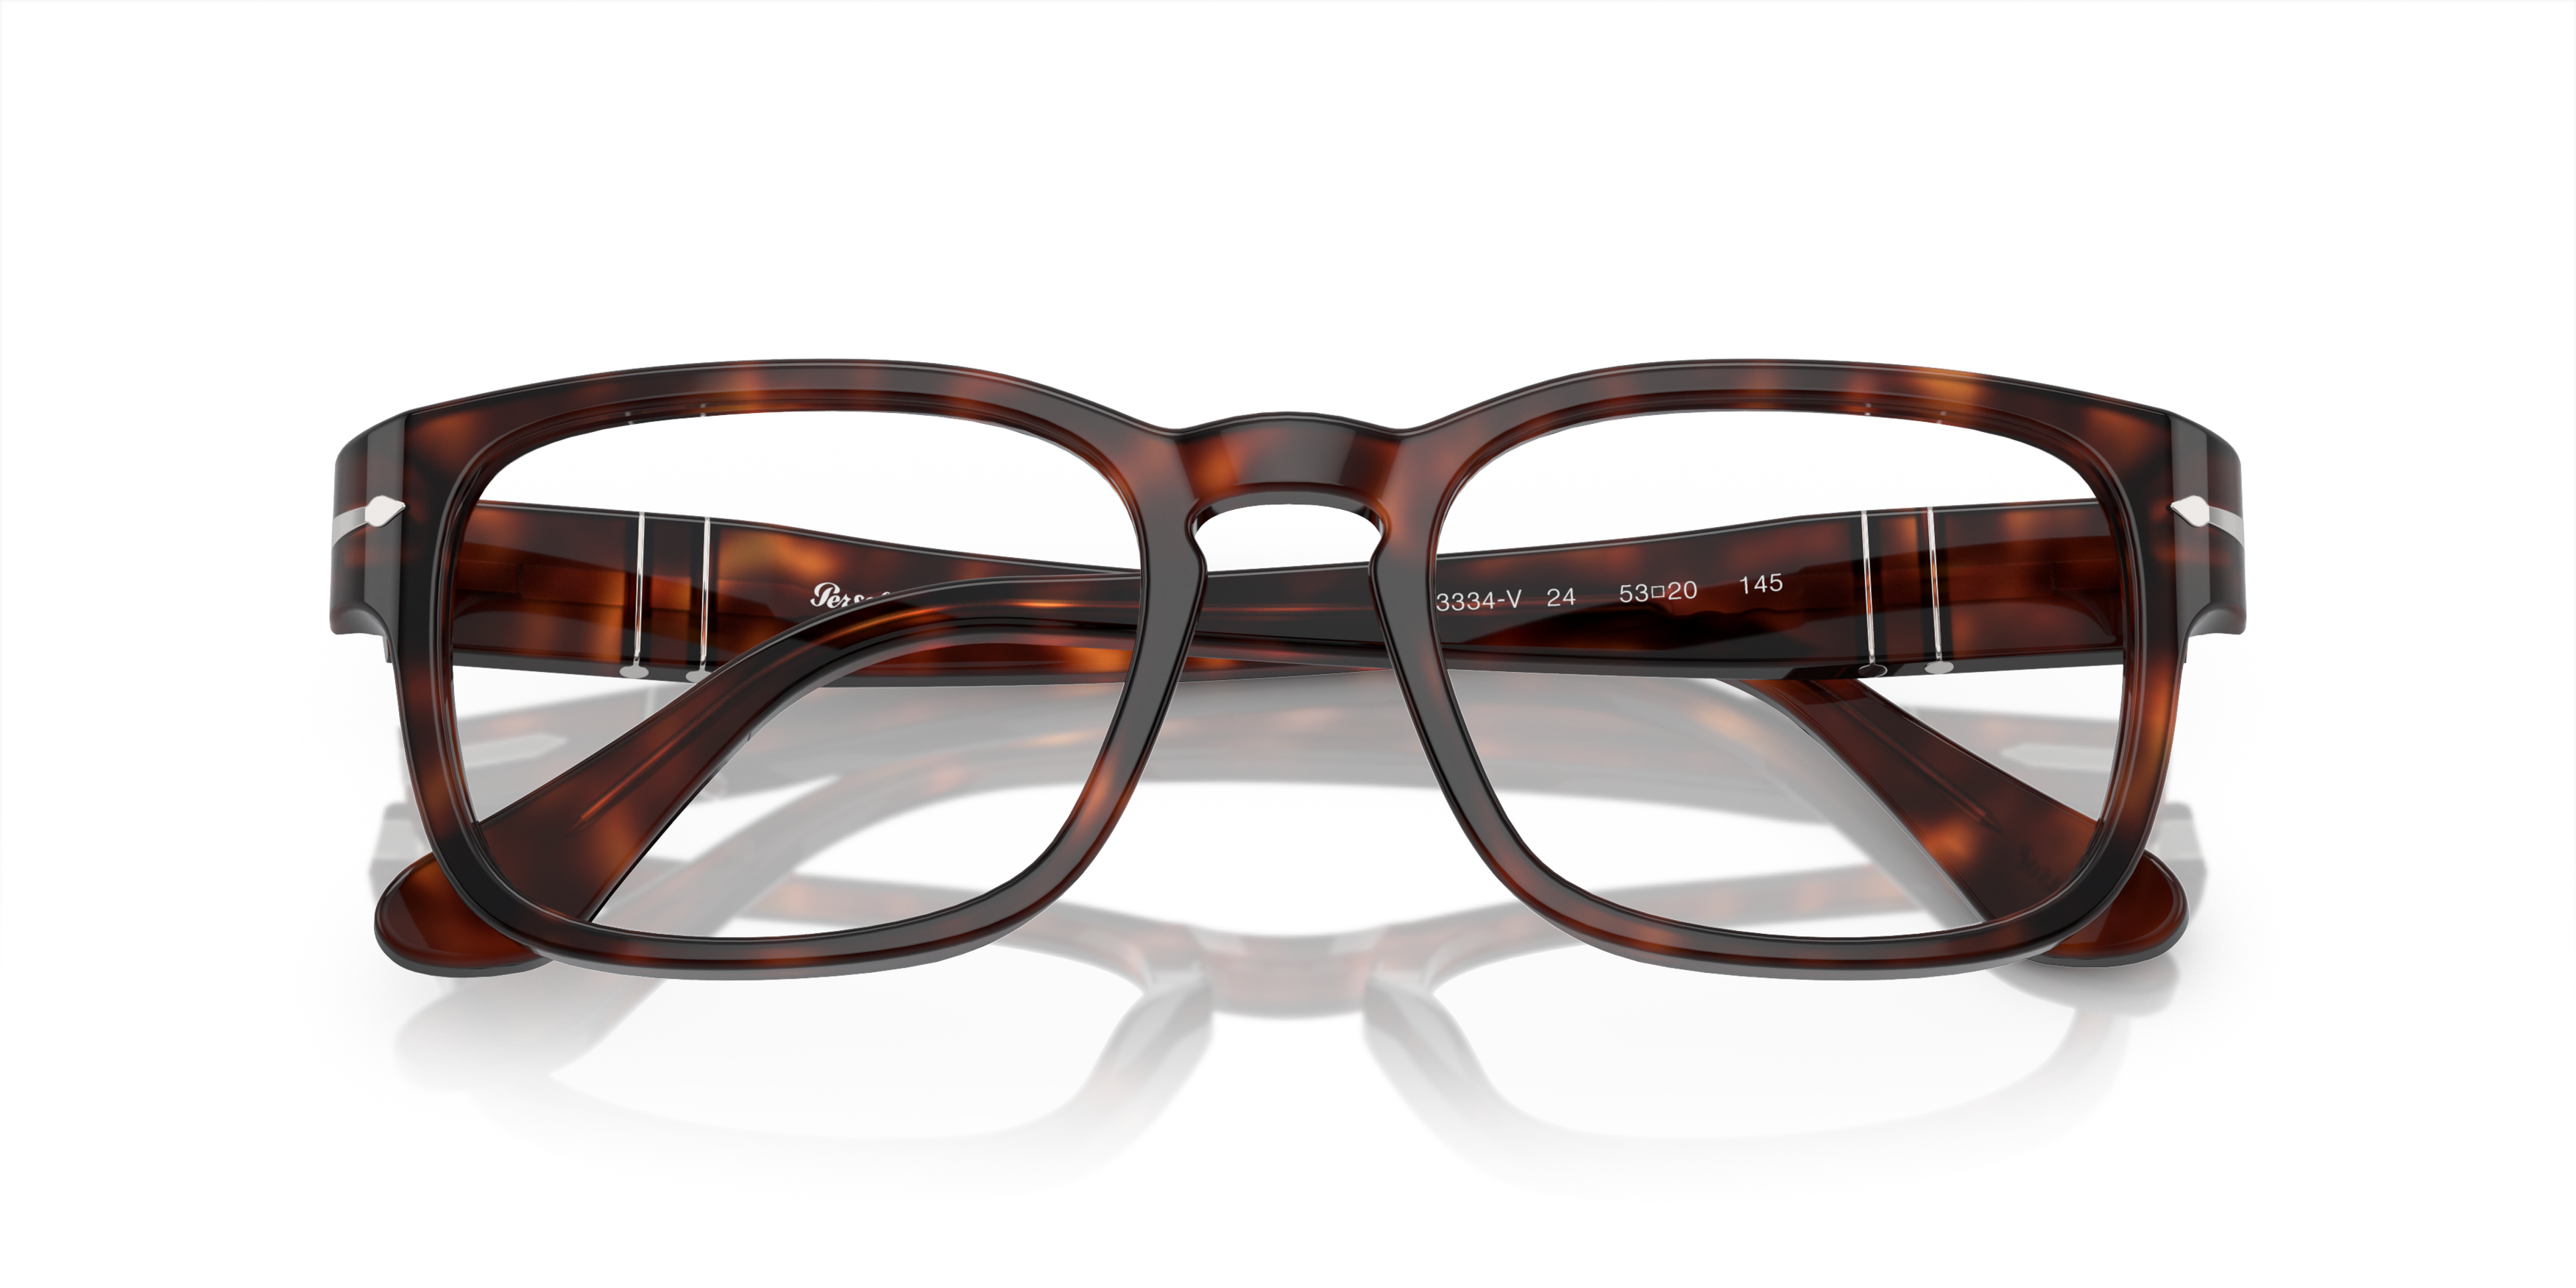 Folded Persol PO 3334V Glasses Transparent / Black